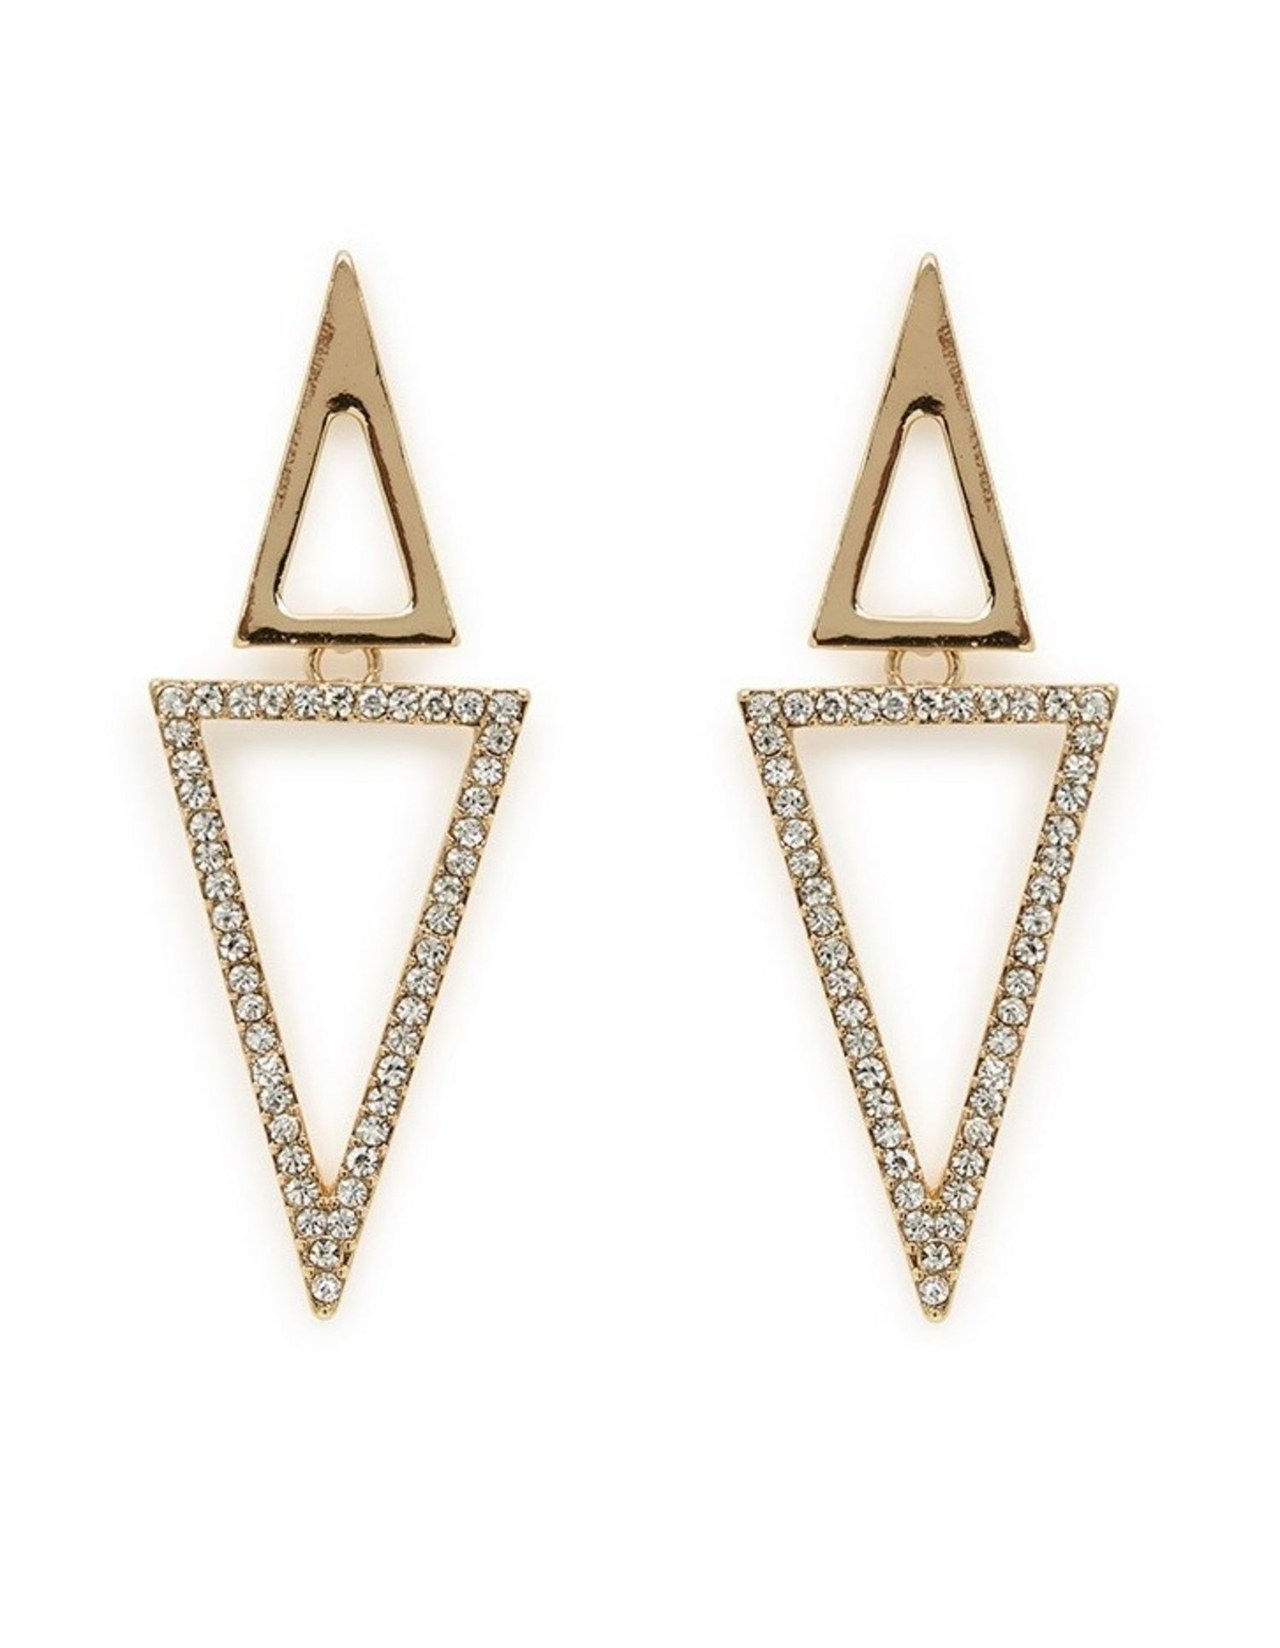 梅利莎 gorga hsn pave triangle earrings